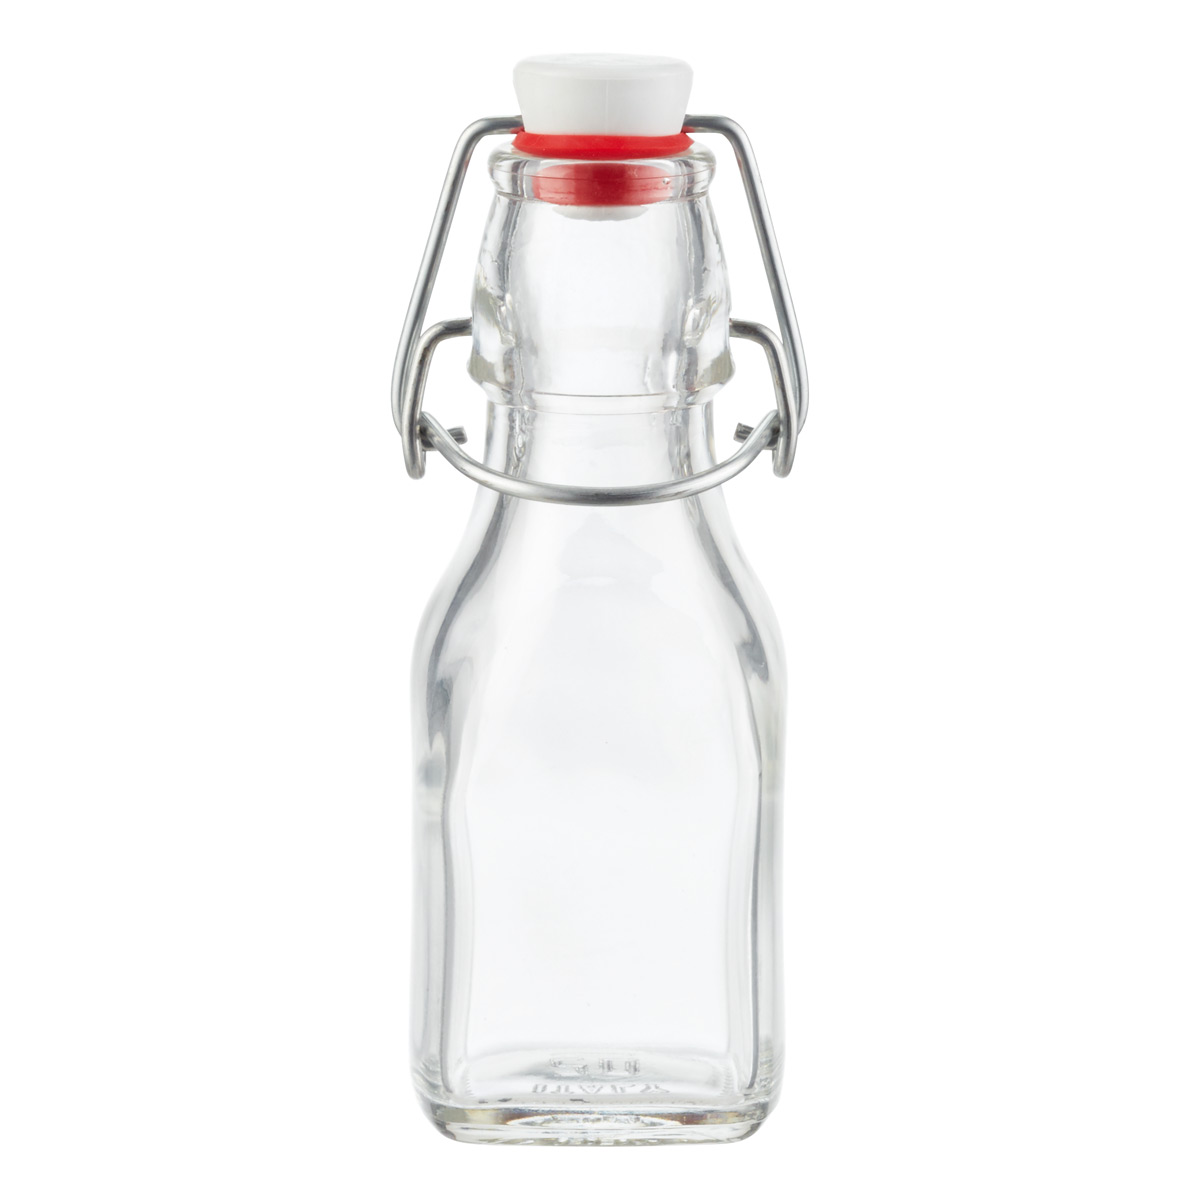 Bormioli Rocco Swing Bottle - 12.5CL (4.25 oz)